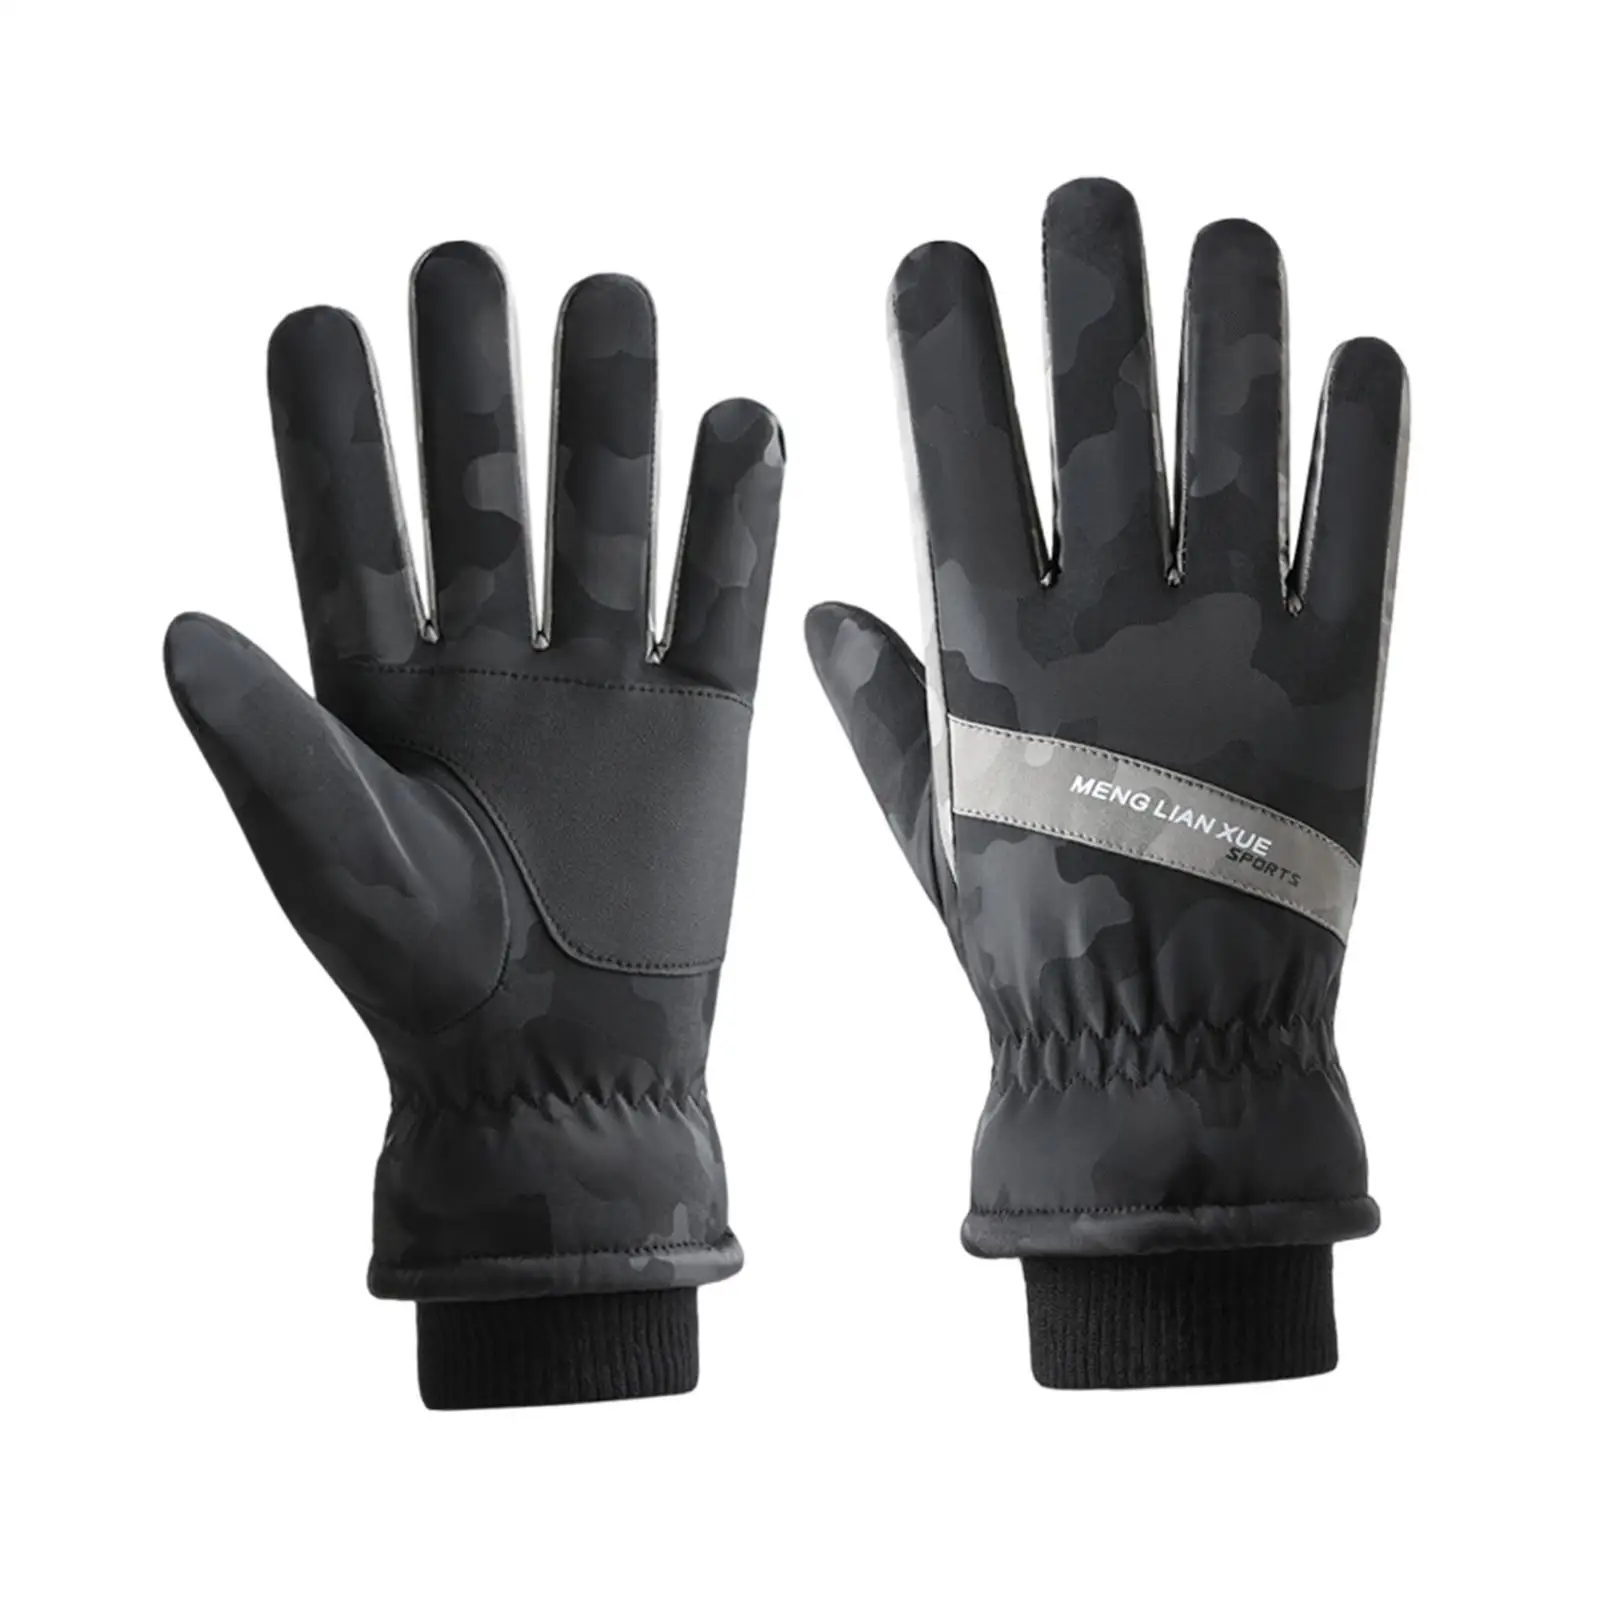 Winter Gloves Touchscreen Mittens Road Bike Gloves Waterproof Warm Gloves for Running Motorcycling Sports Gloves Biking Riding